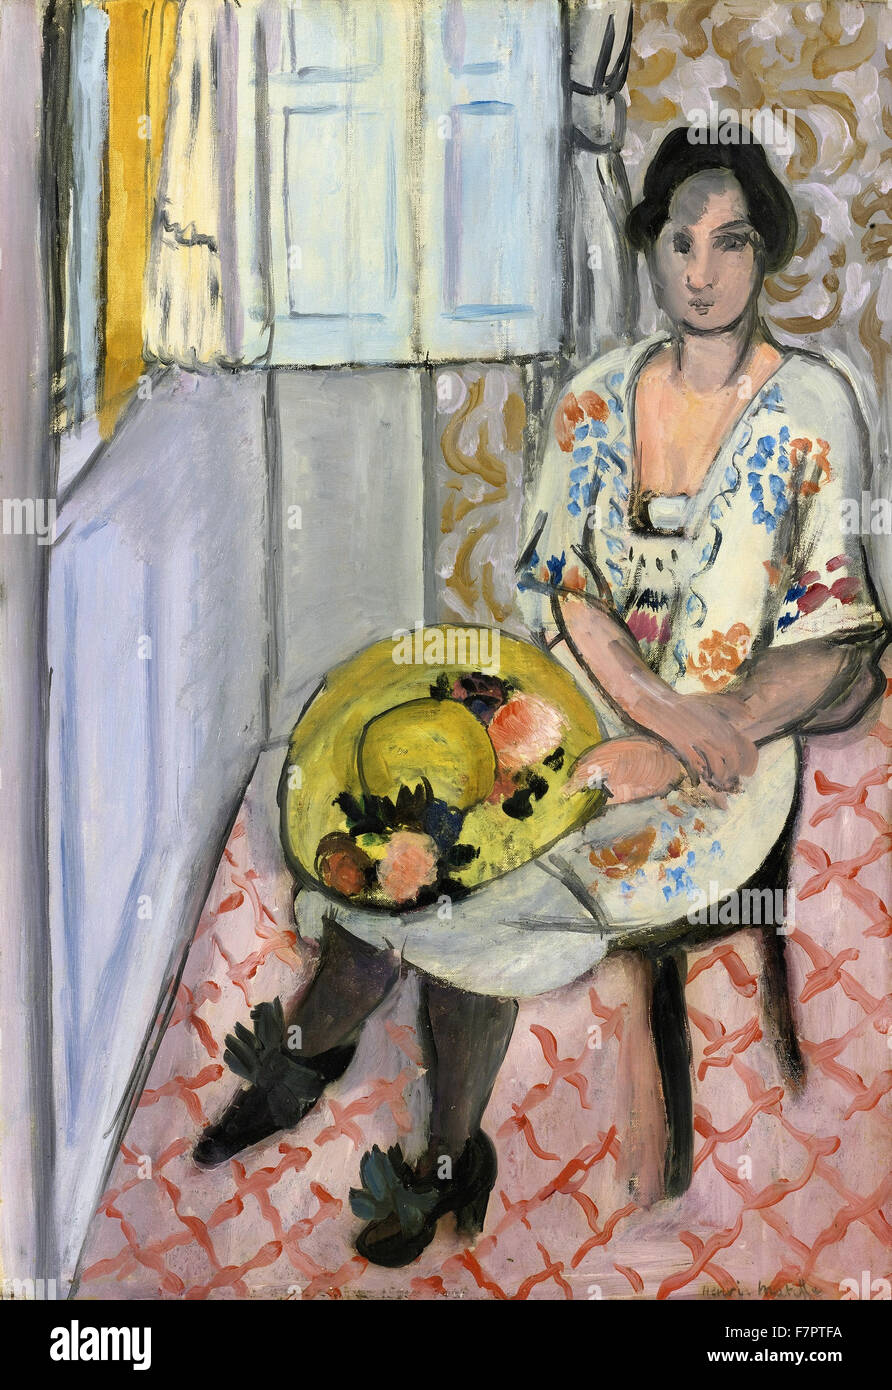 Henri Matisse - Femme au Chapeau Stock Photo - Alamy